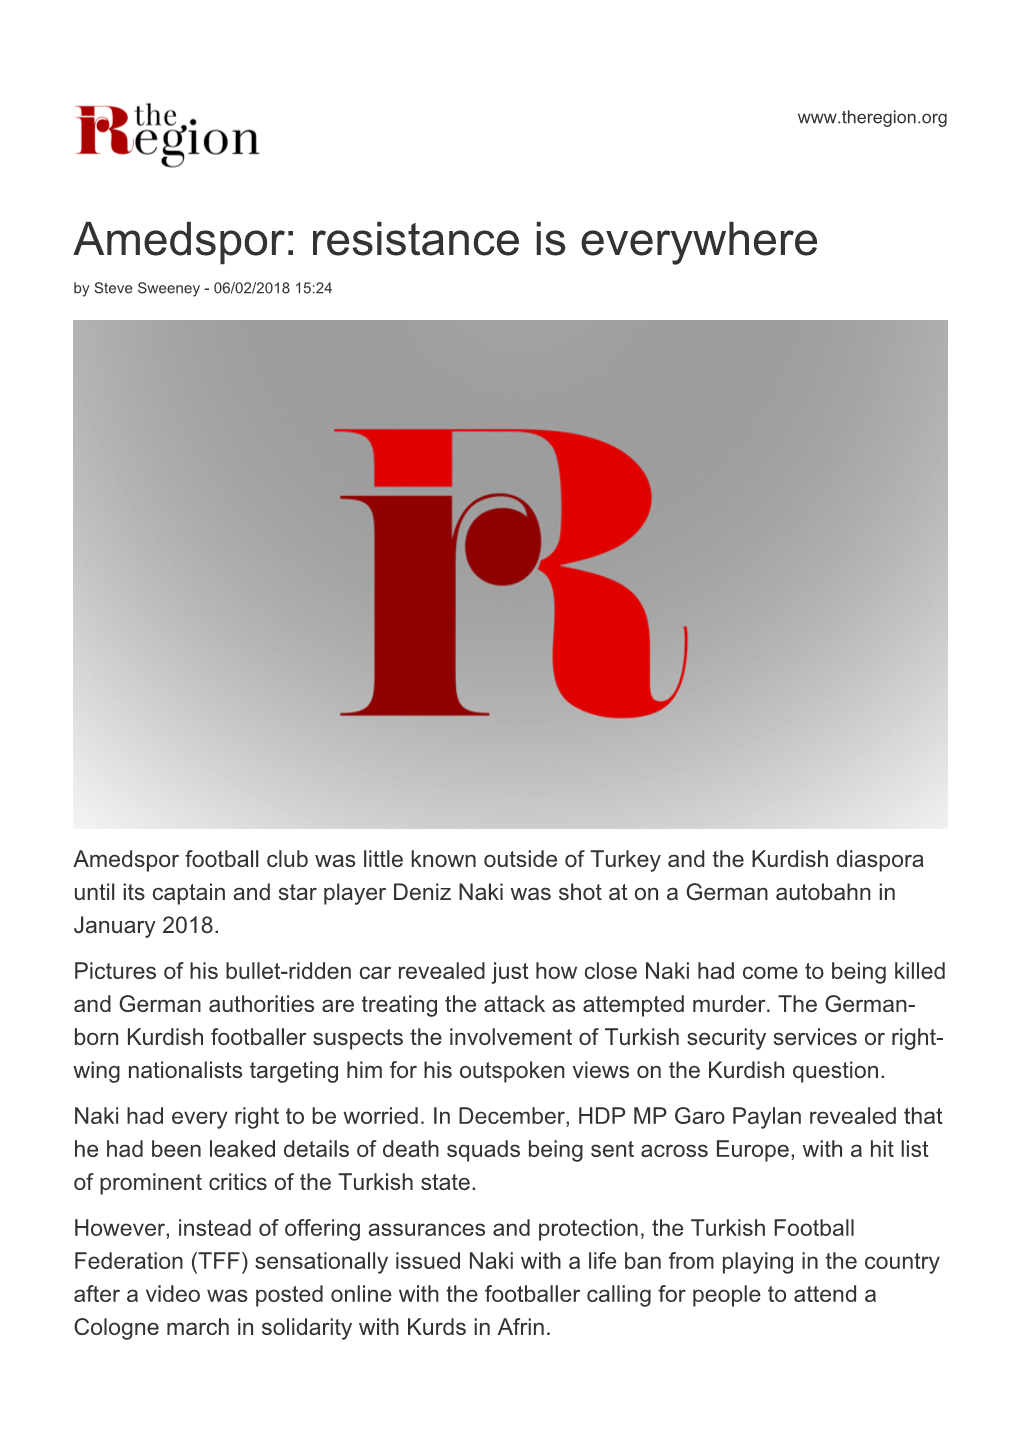 Amedspor: Resistance Is Everywhere by Steve Sweeney - 06/02/2018 15:24